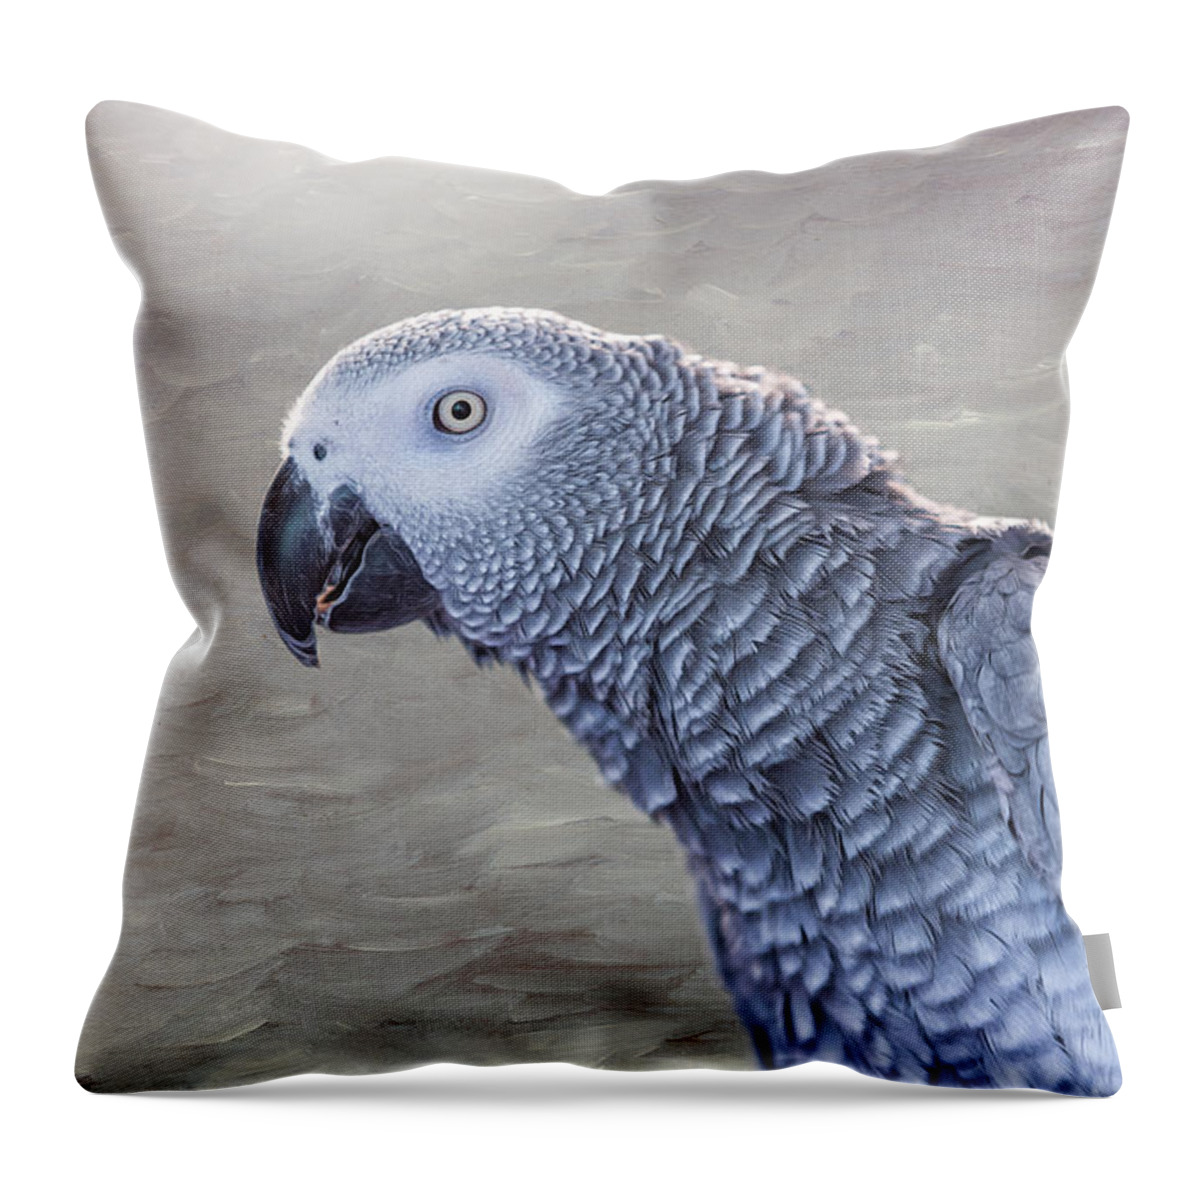 Bird Throw Pillow featuring the photograph African Grey by Bill and Linda Tiepelman